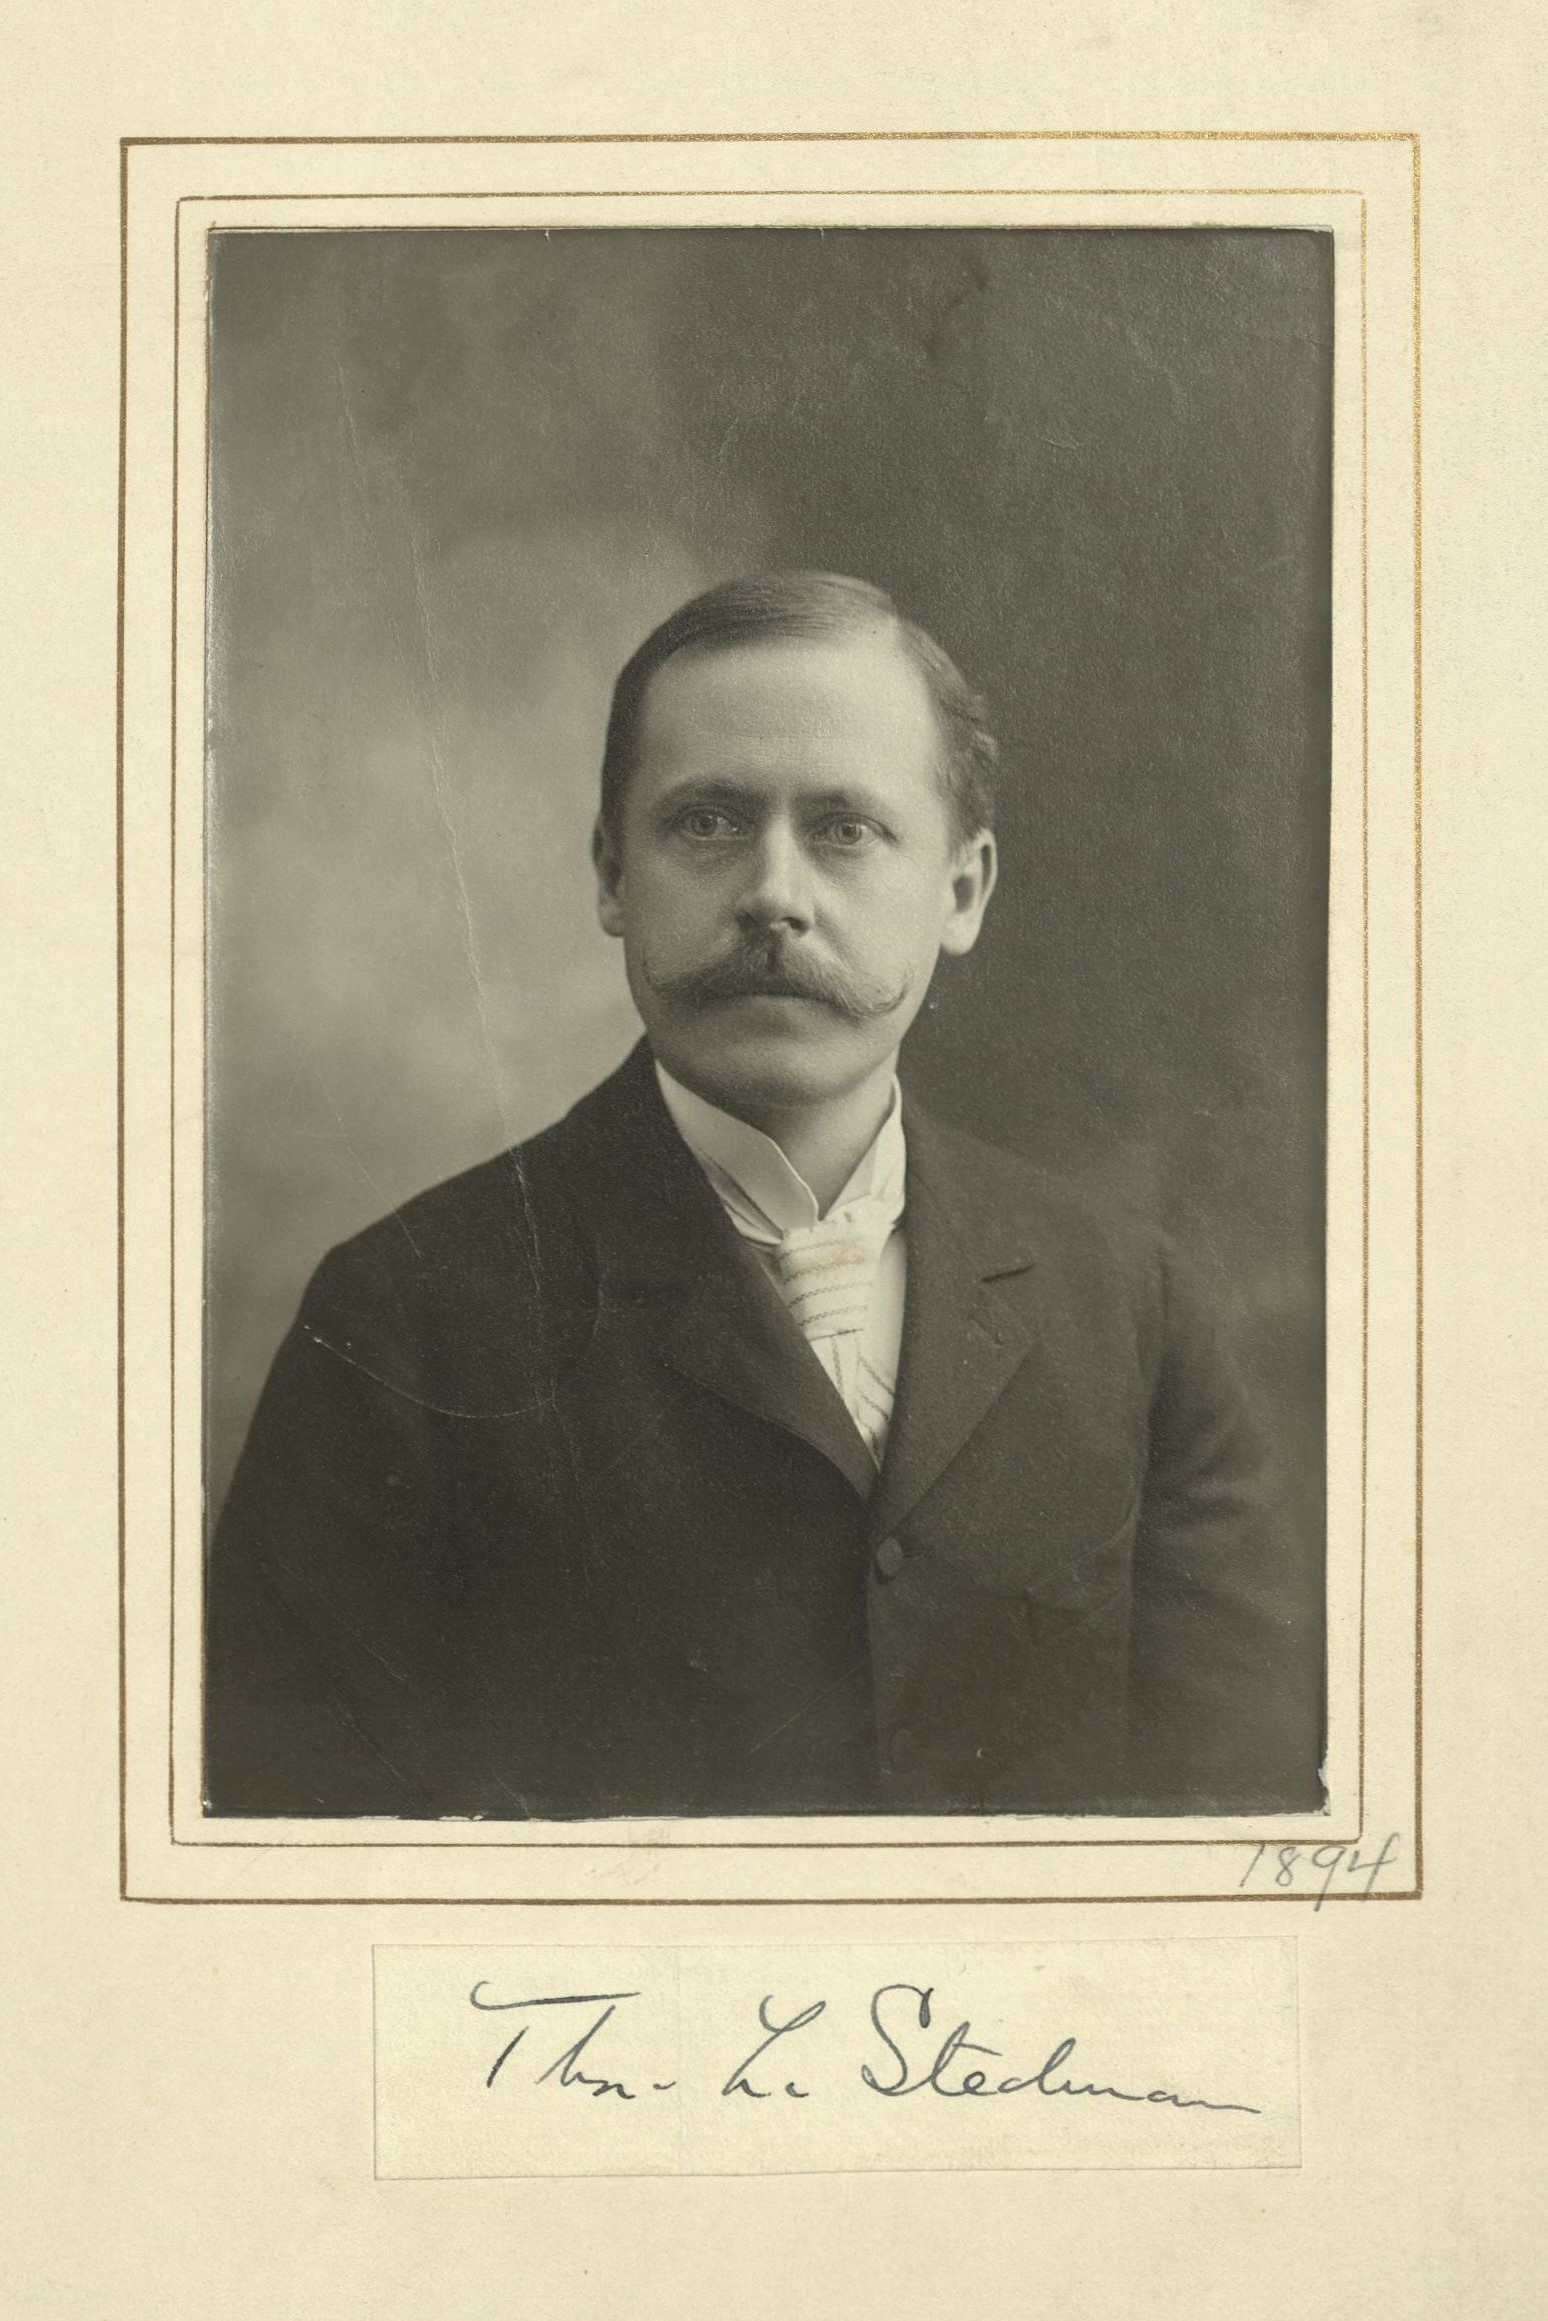 Member portrait of Thomas Lathrop Stedman